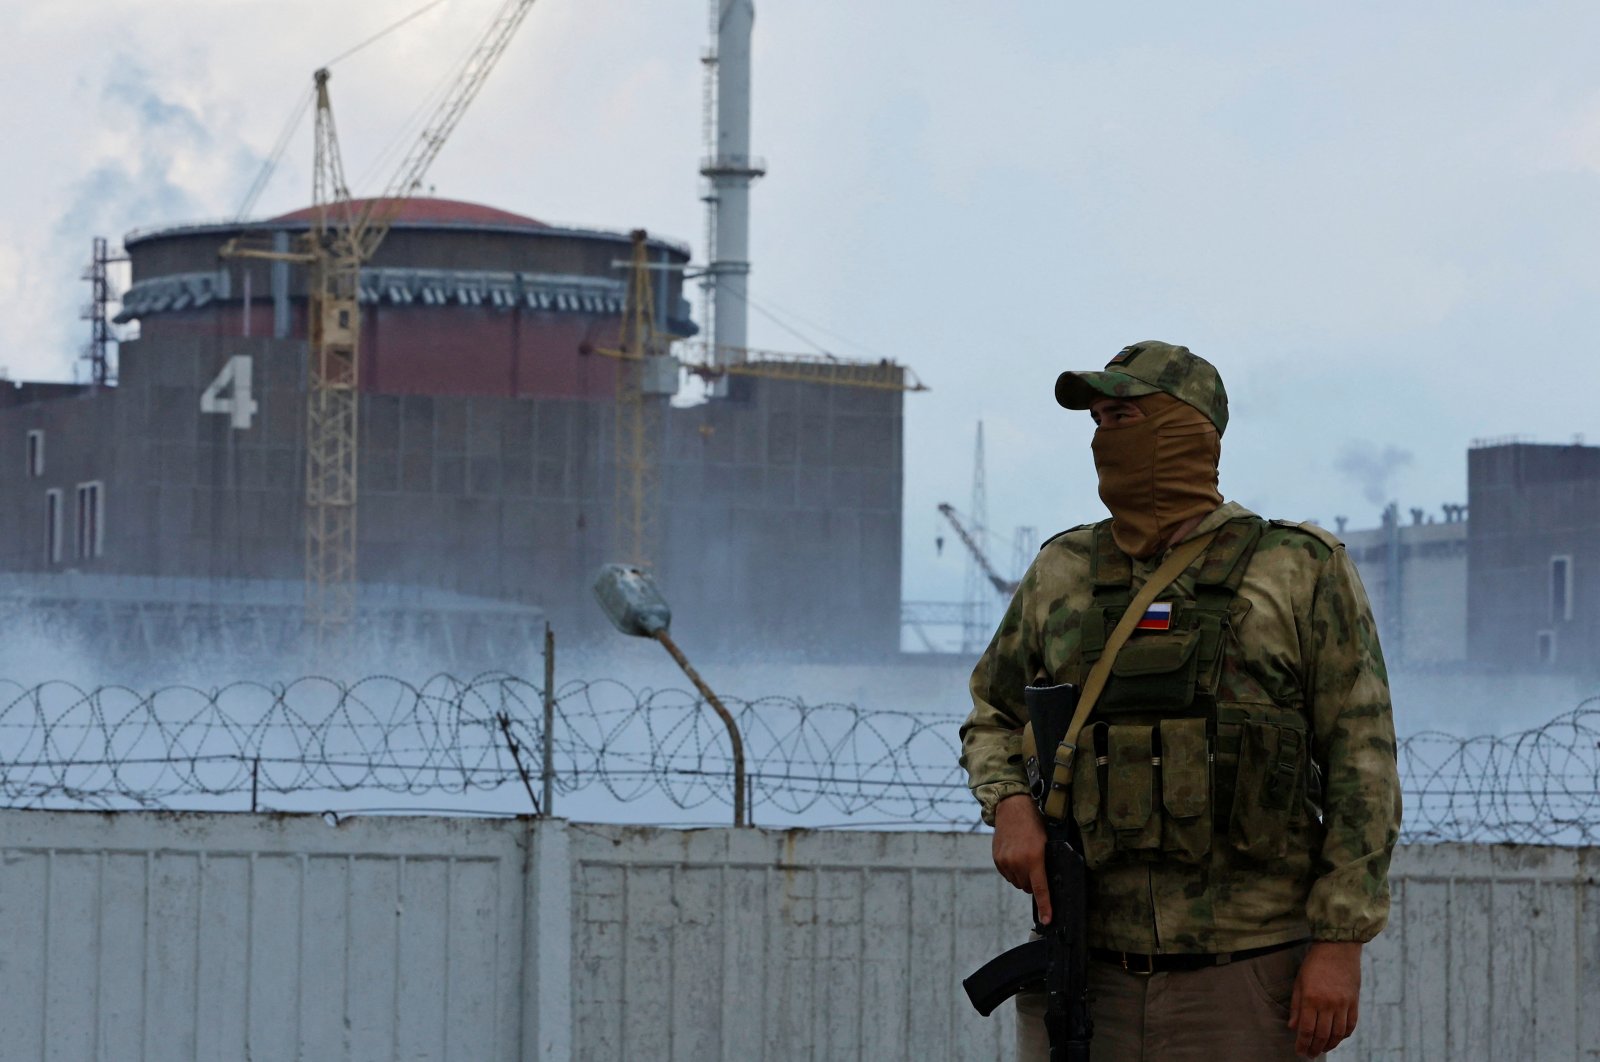 A serviceman with a Russian flag on his uniform stands guard near the Zaporizhzhia Nuclear Power Plant, Zaporizhzhia region, Ukraine, Aug. 4, 2022. (Reuters Photo)